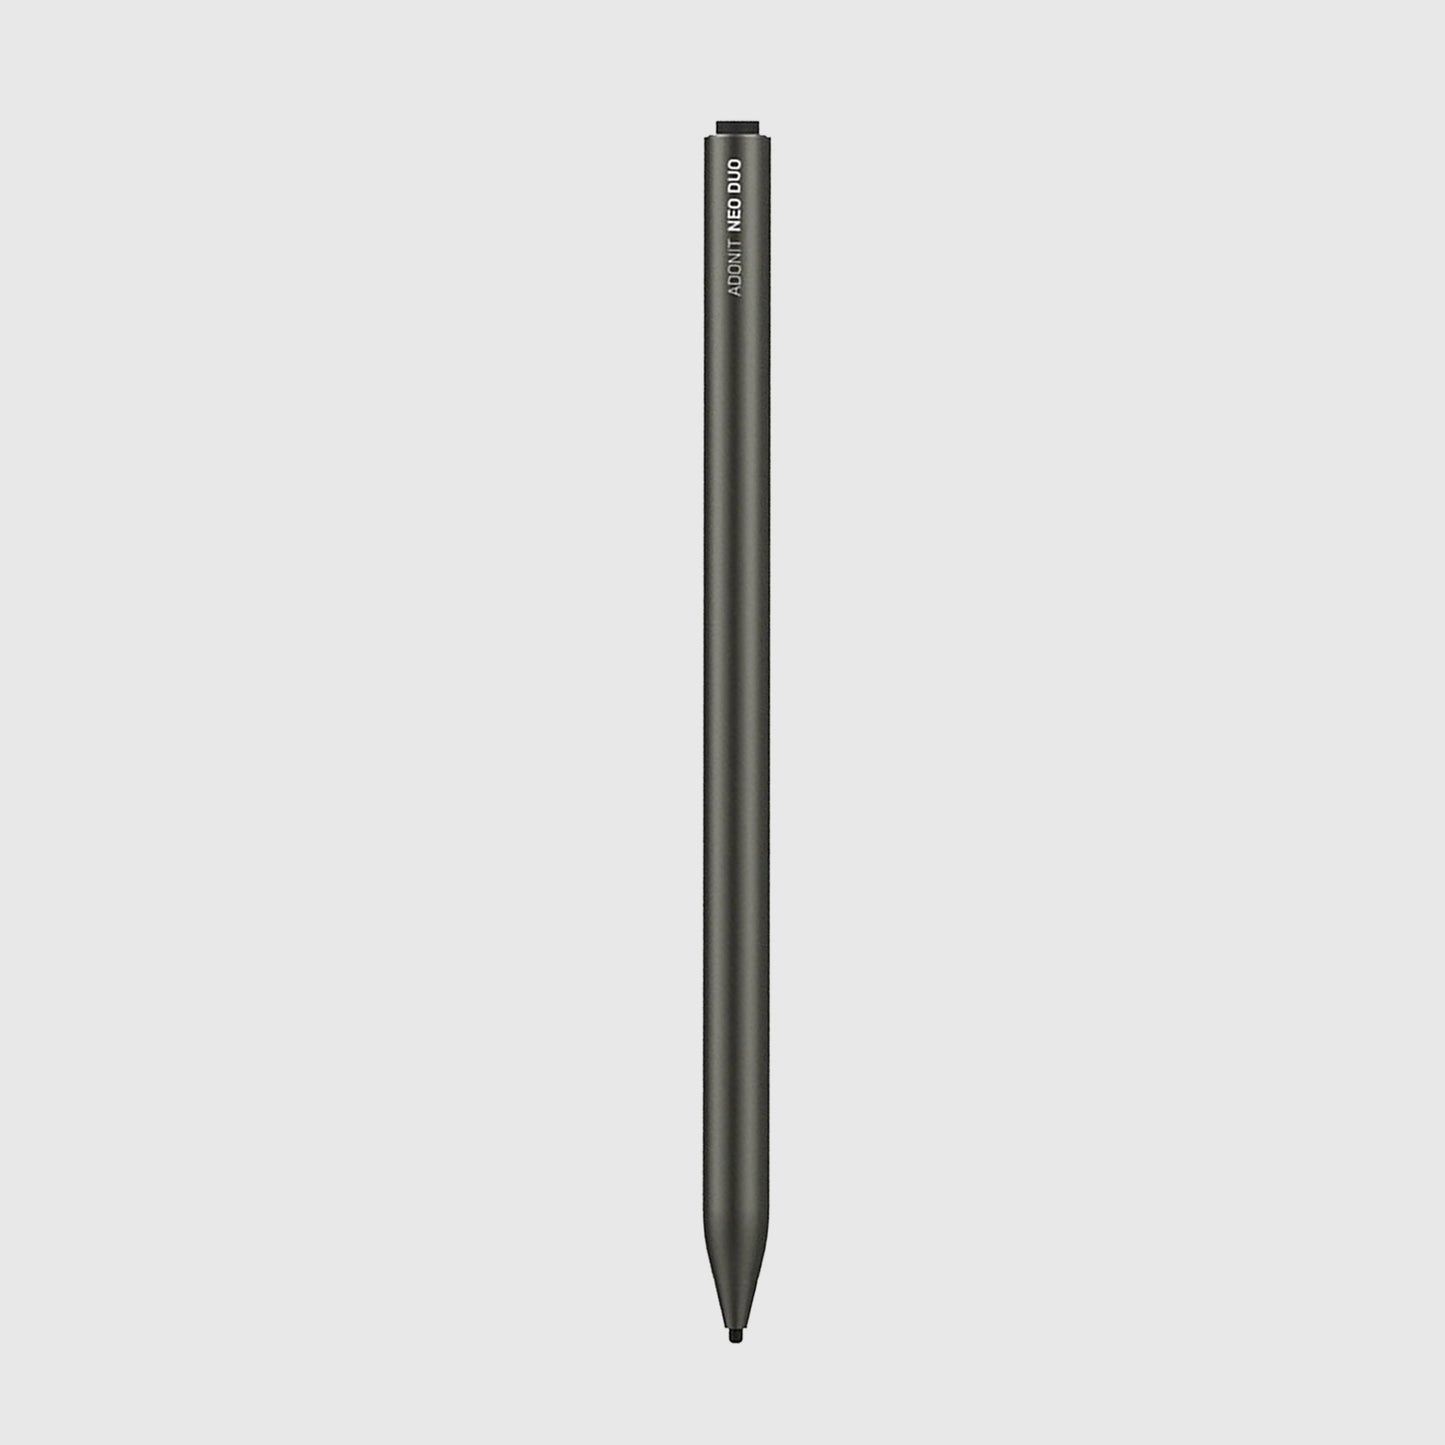 Adonit Neo Duo Stylus Pen - Graphite Black (Barcode: 847663024062 )